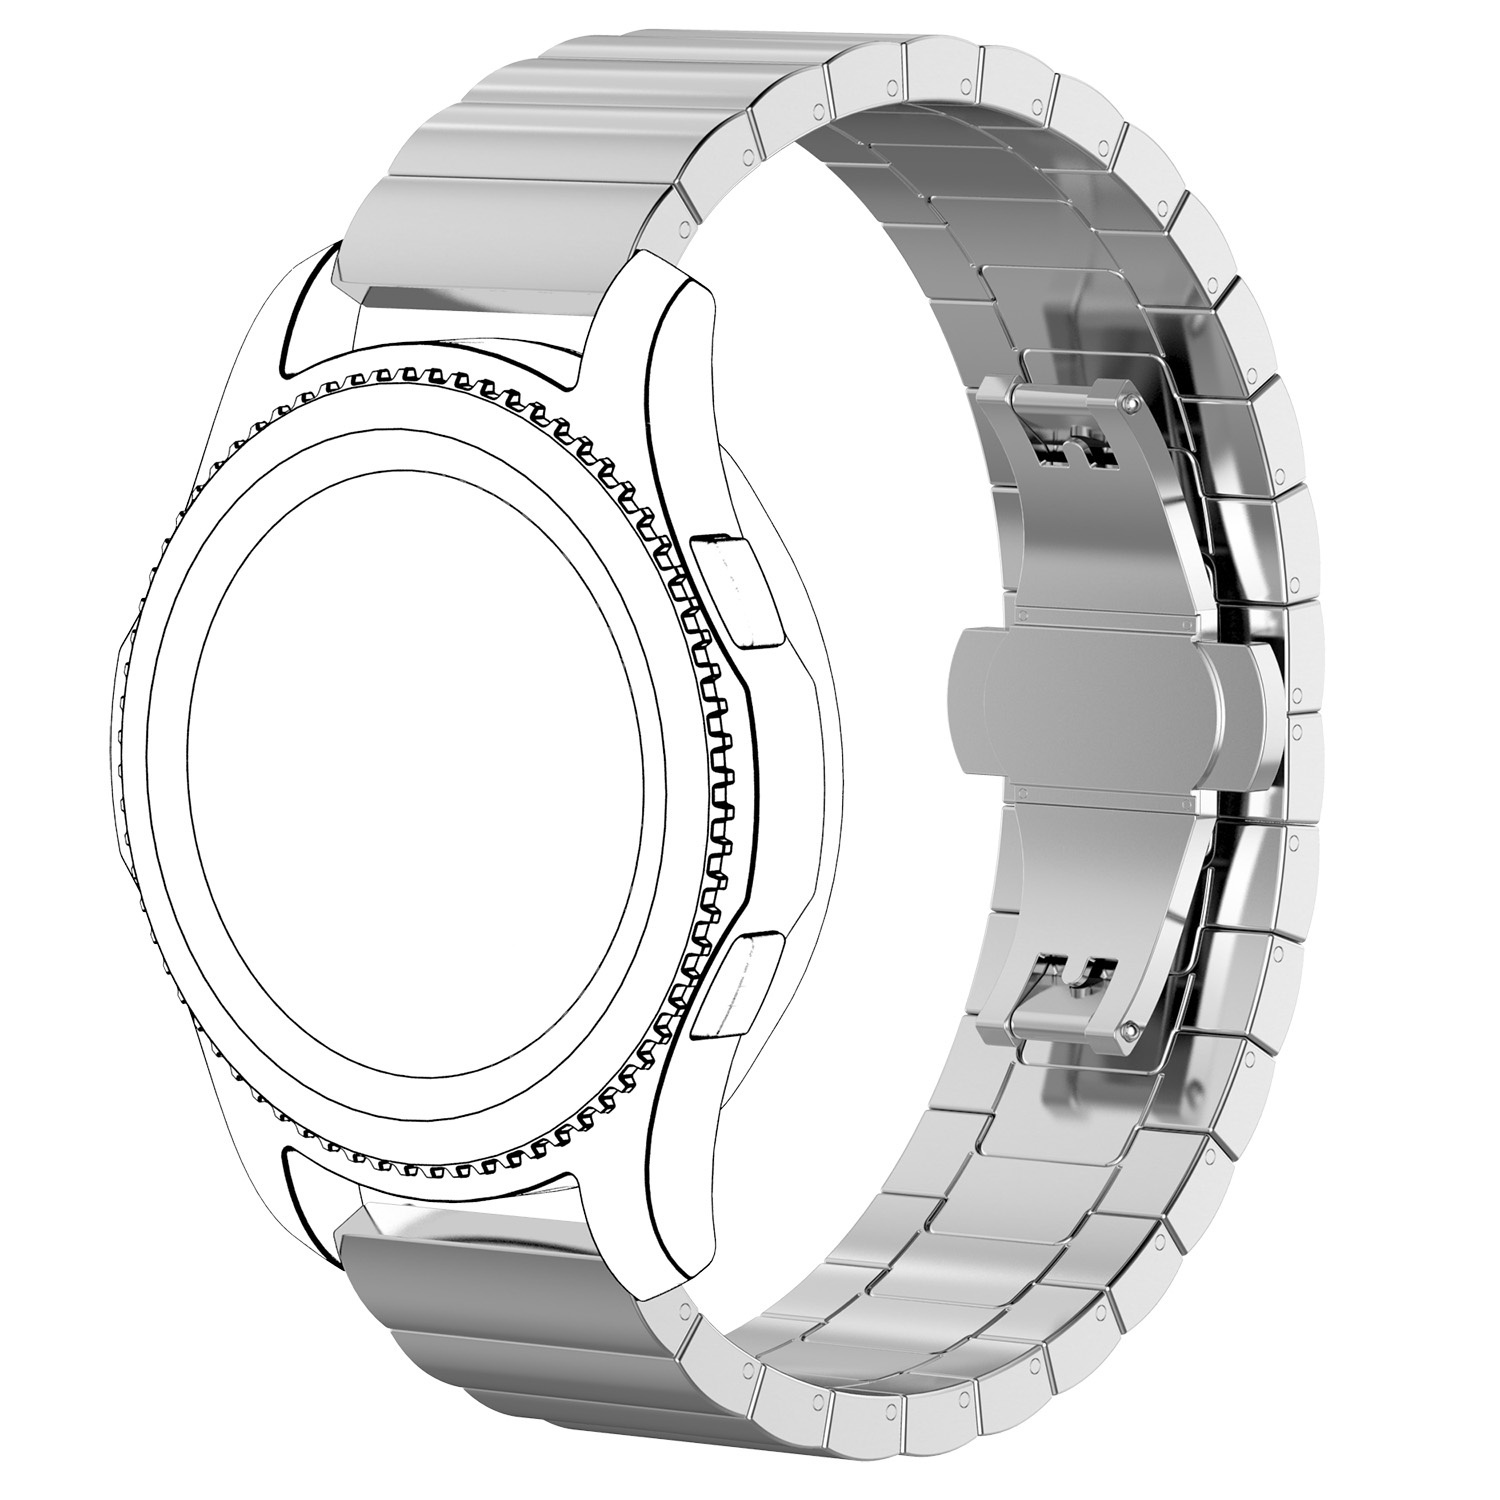 Cinturino a maglie per Samsung Galaxy Watch - argento